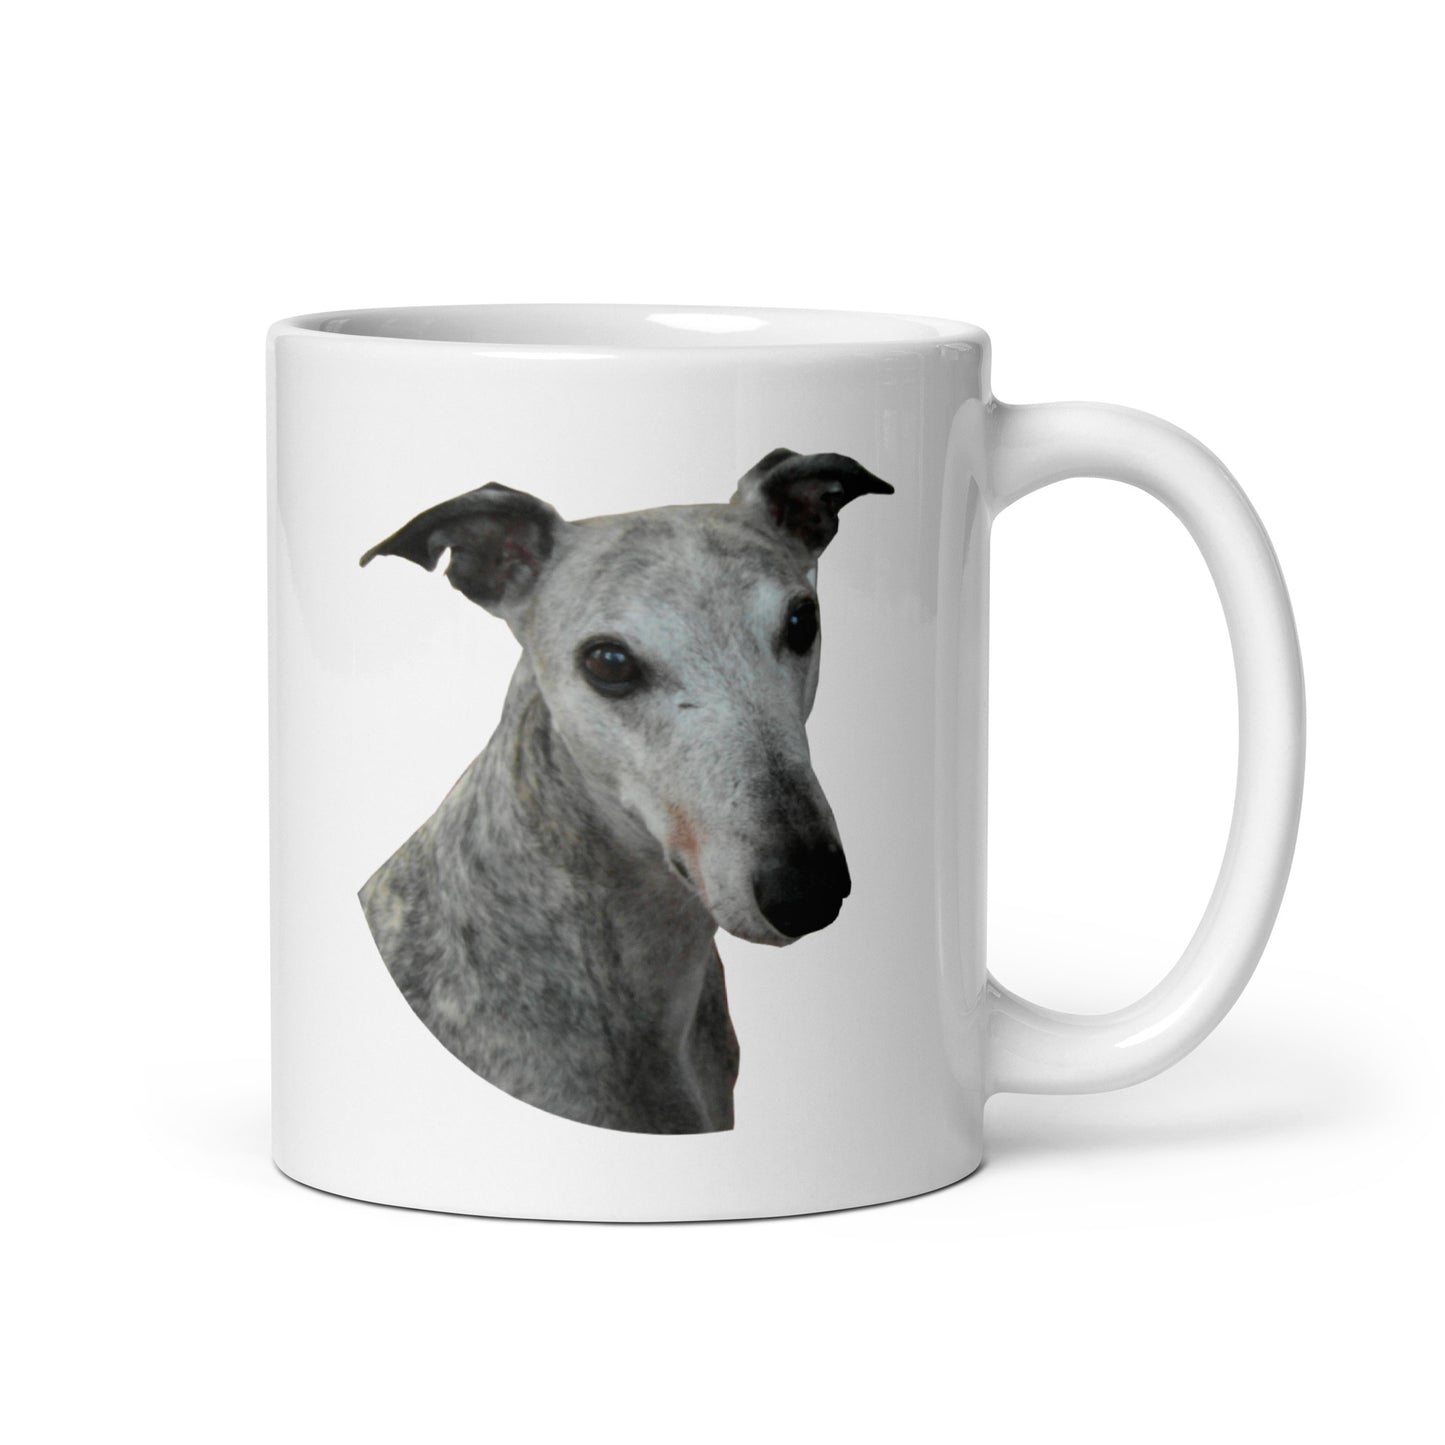 White Glossy Mug printed with a greyhound